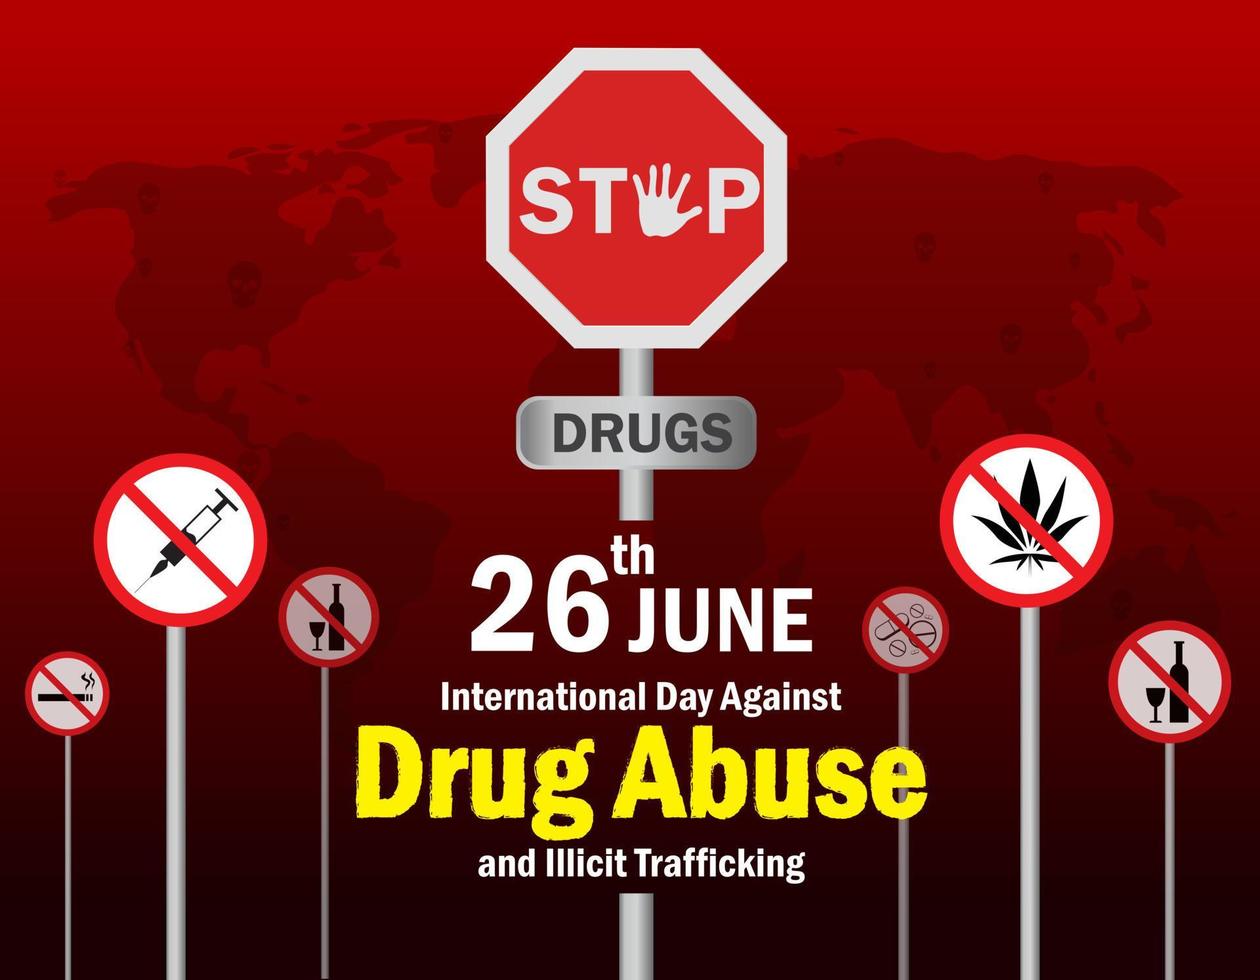 26-june-international-day-against-drug-abuse-and-illicit-trafficking-banner-free-vector.jpg